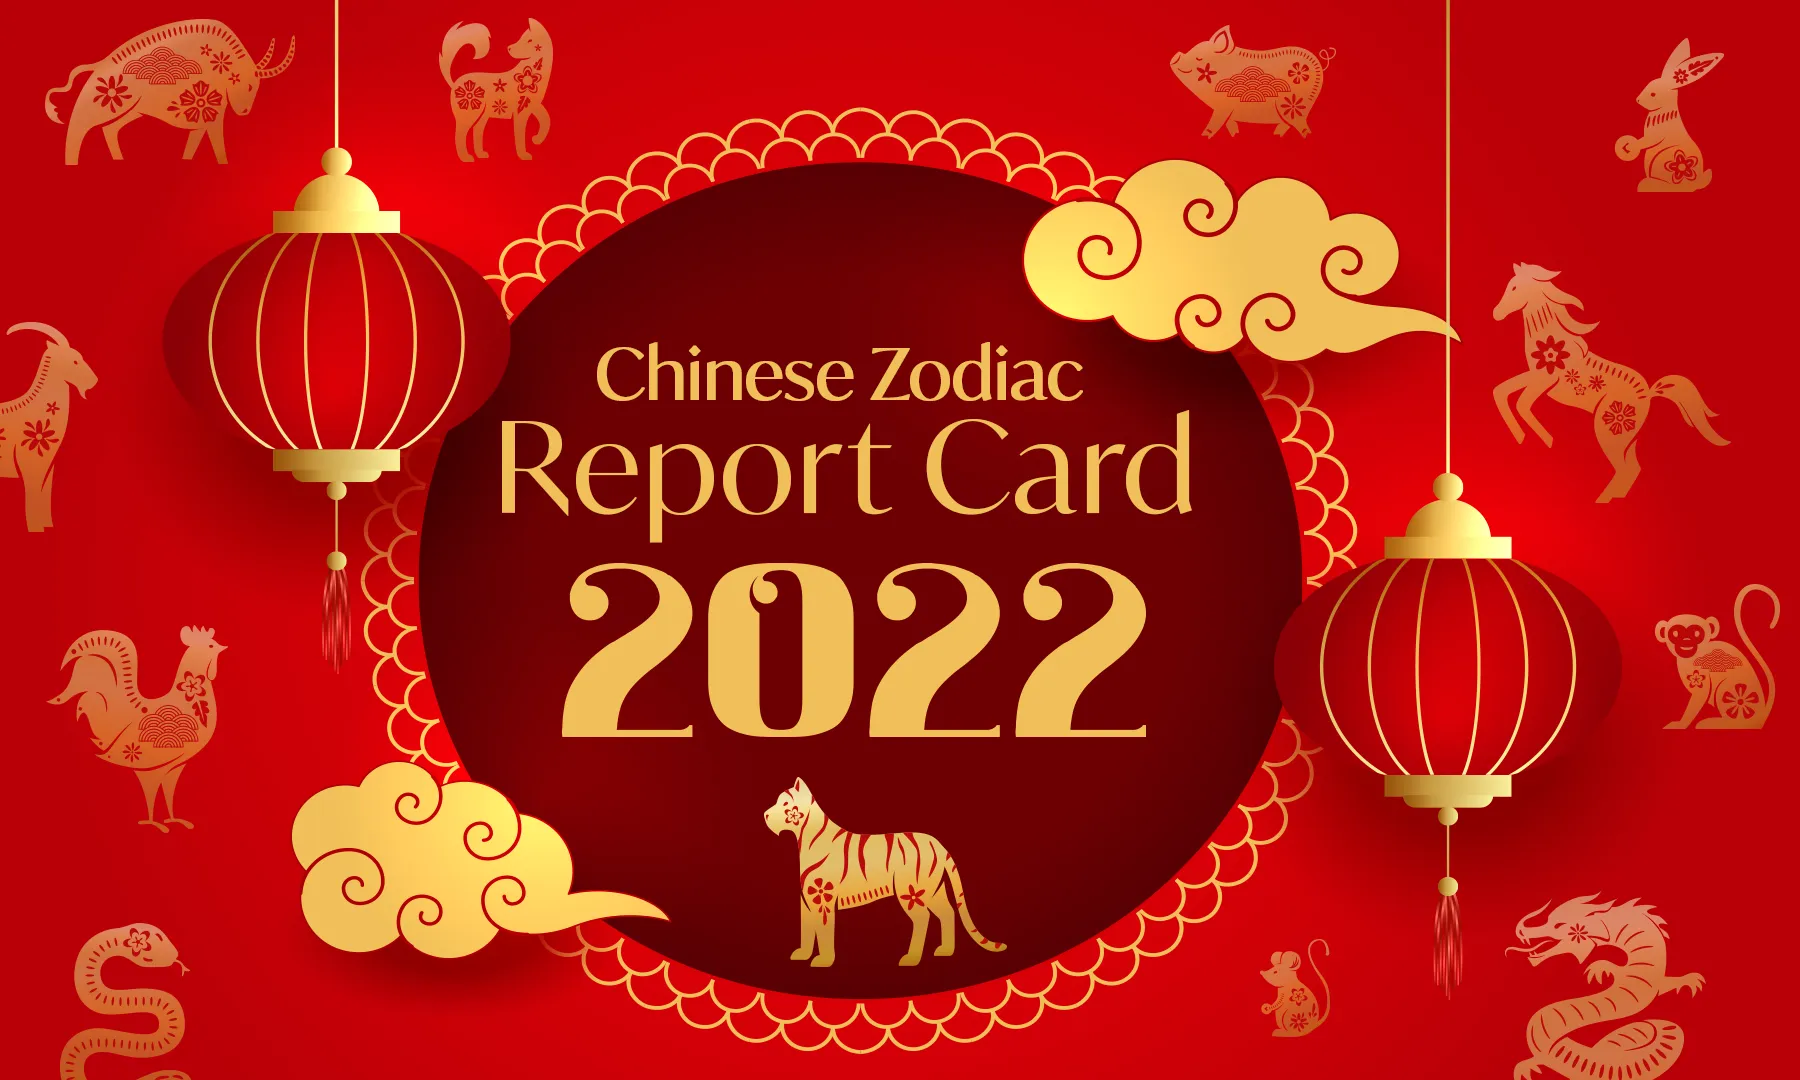 Chinese Zodiac Report Card 2022